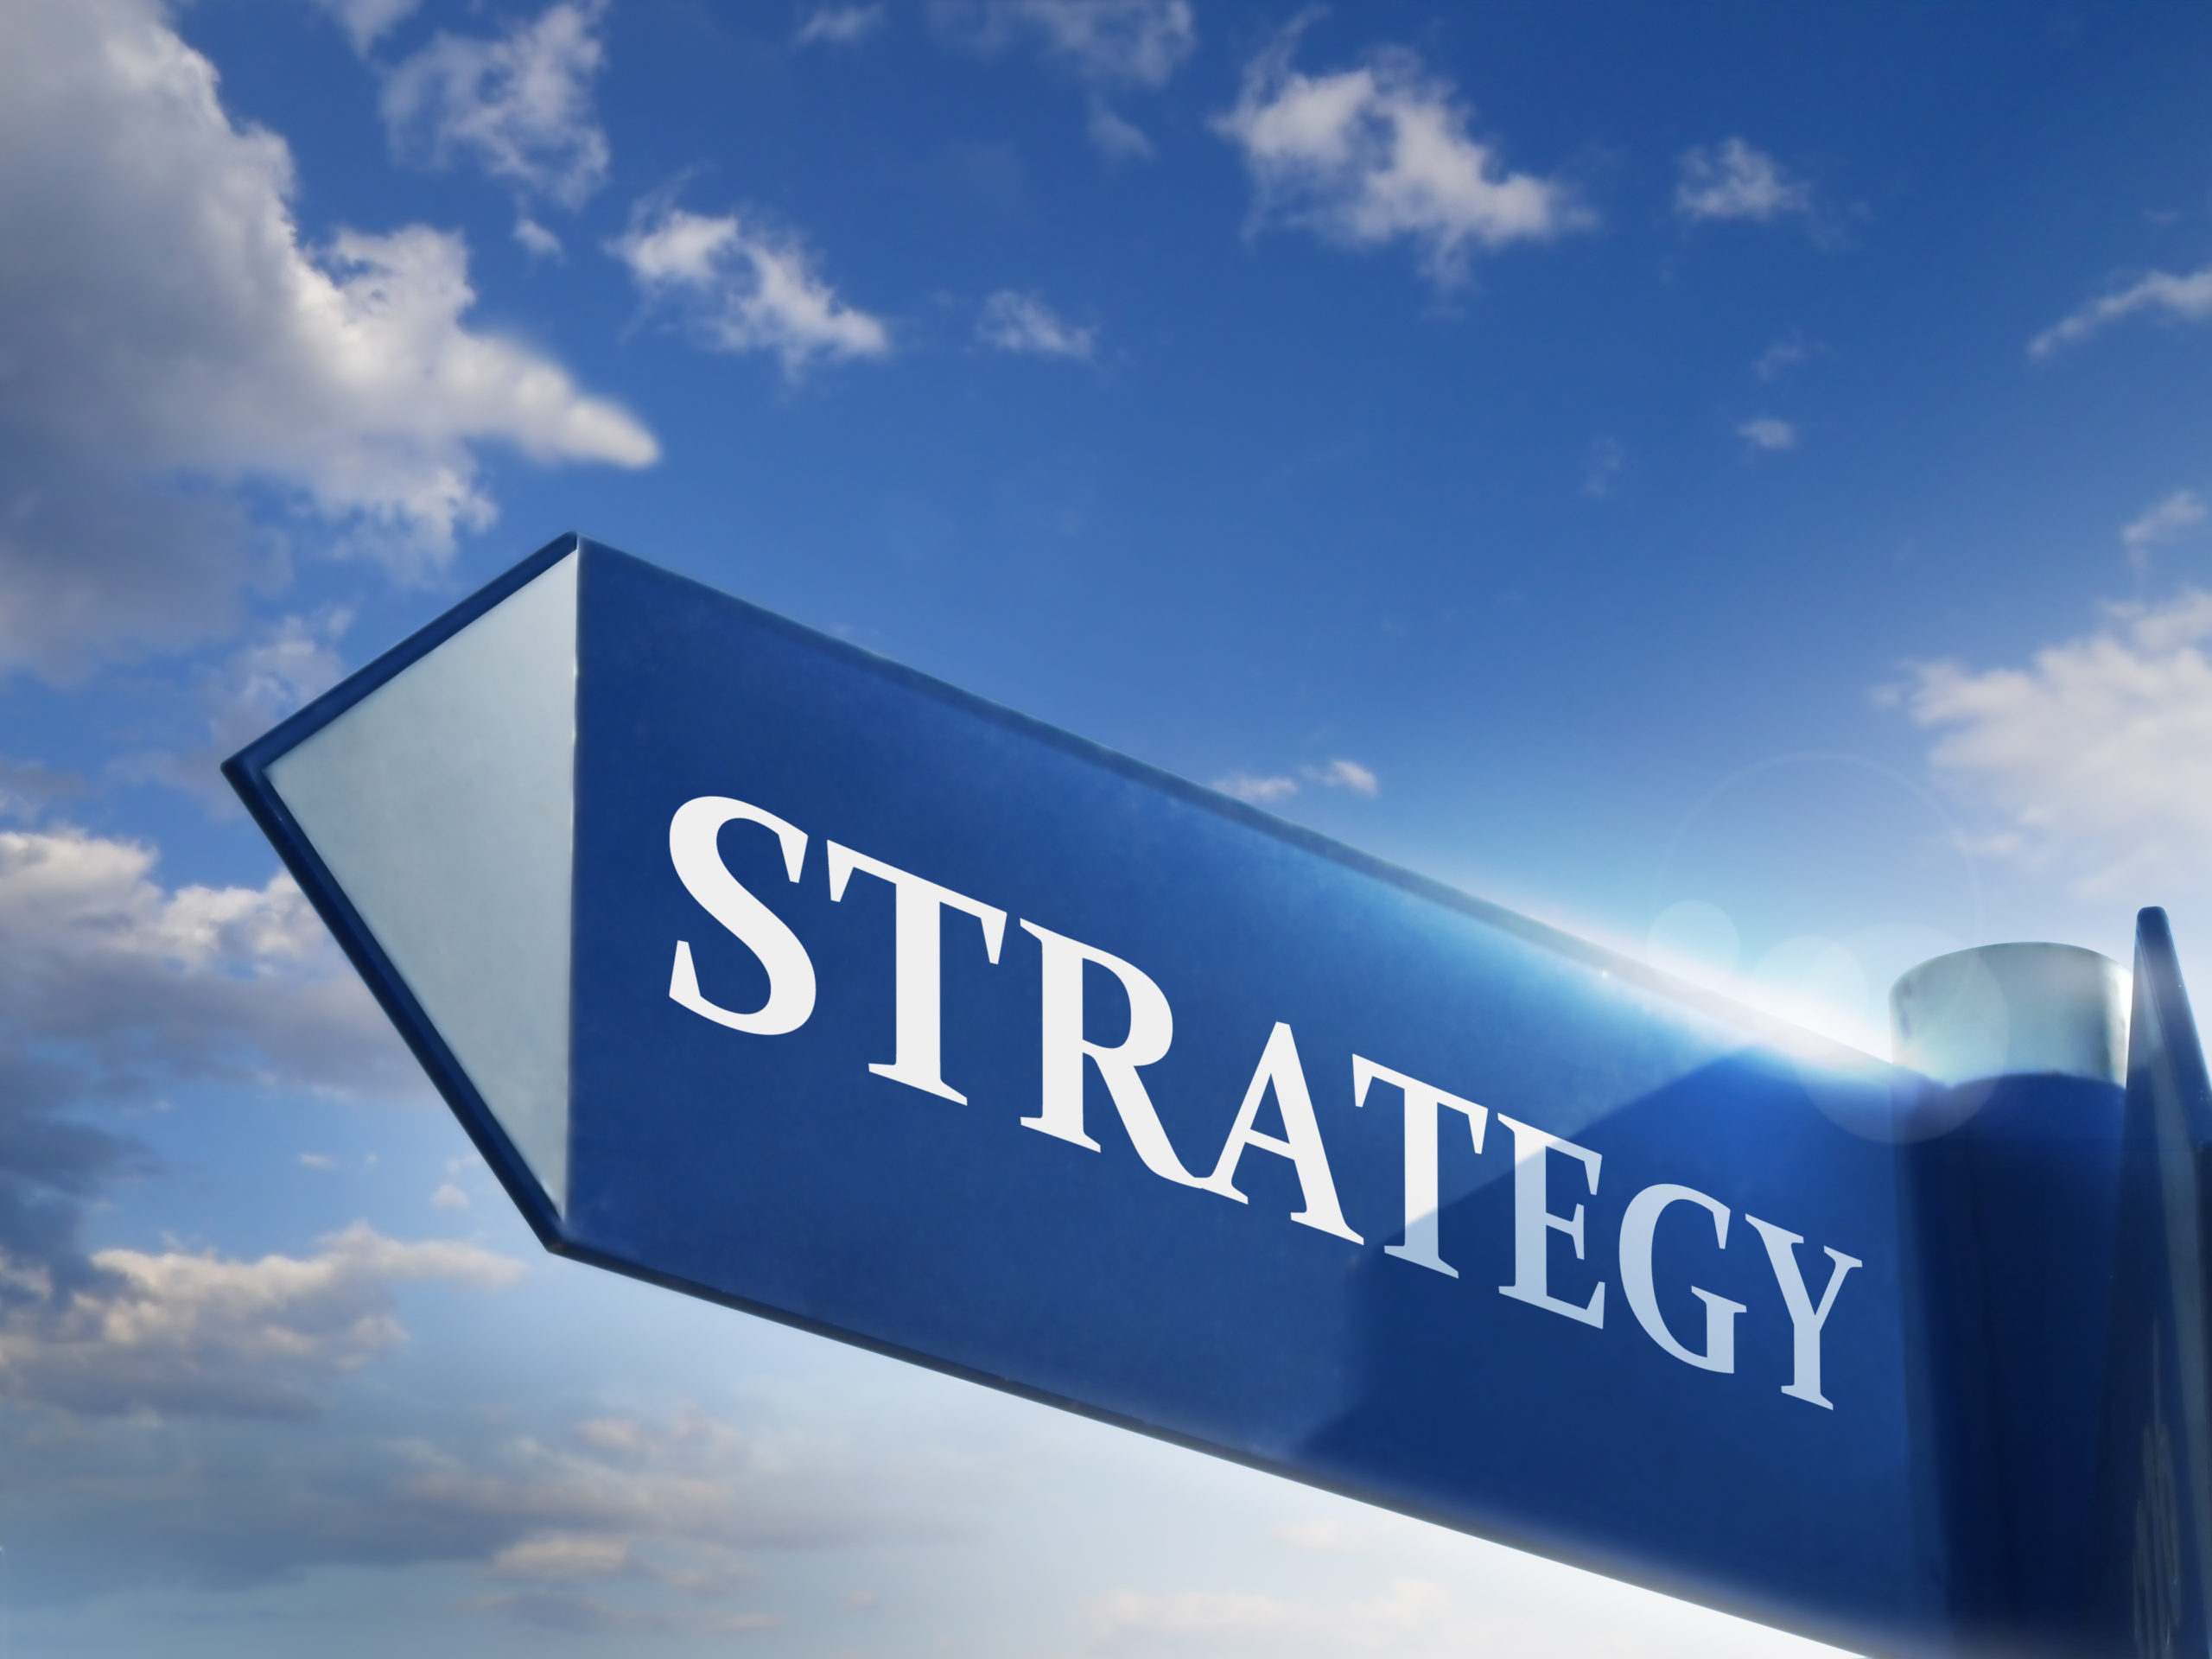 Insightful strategic direction